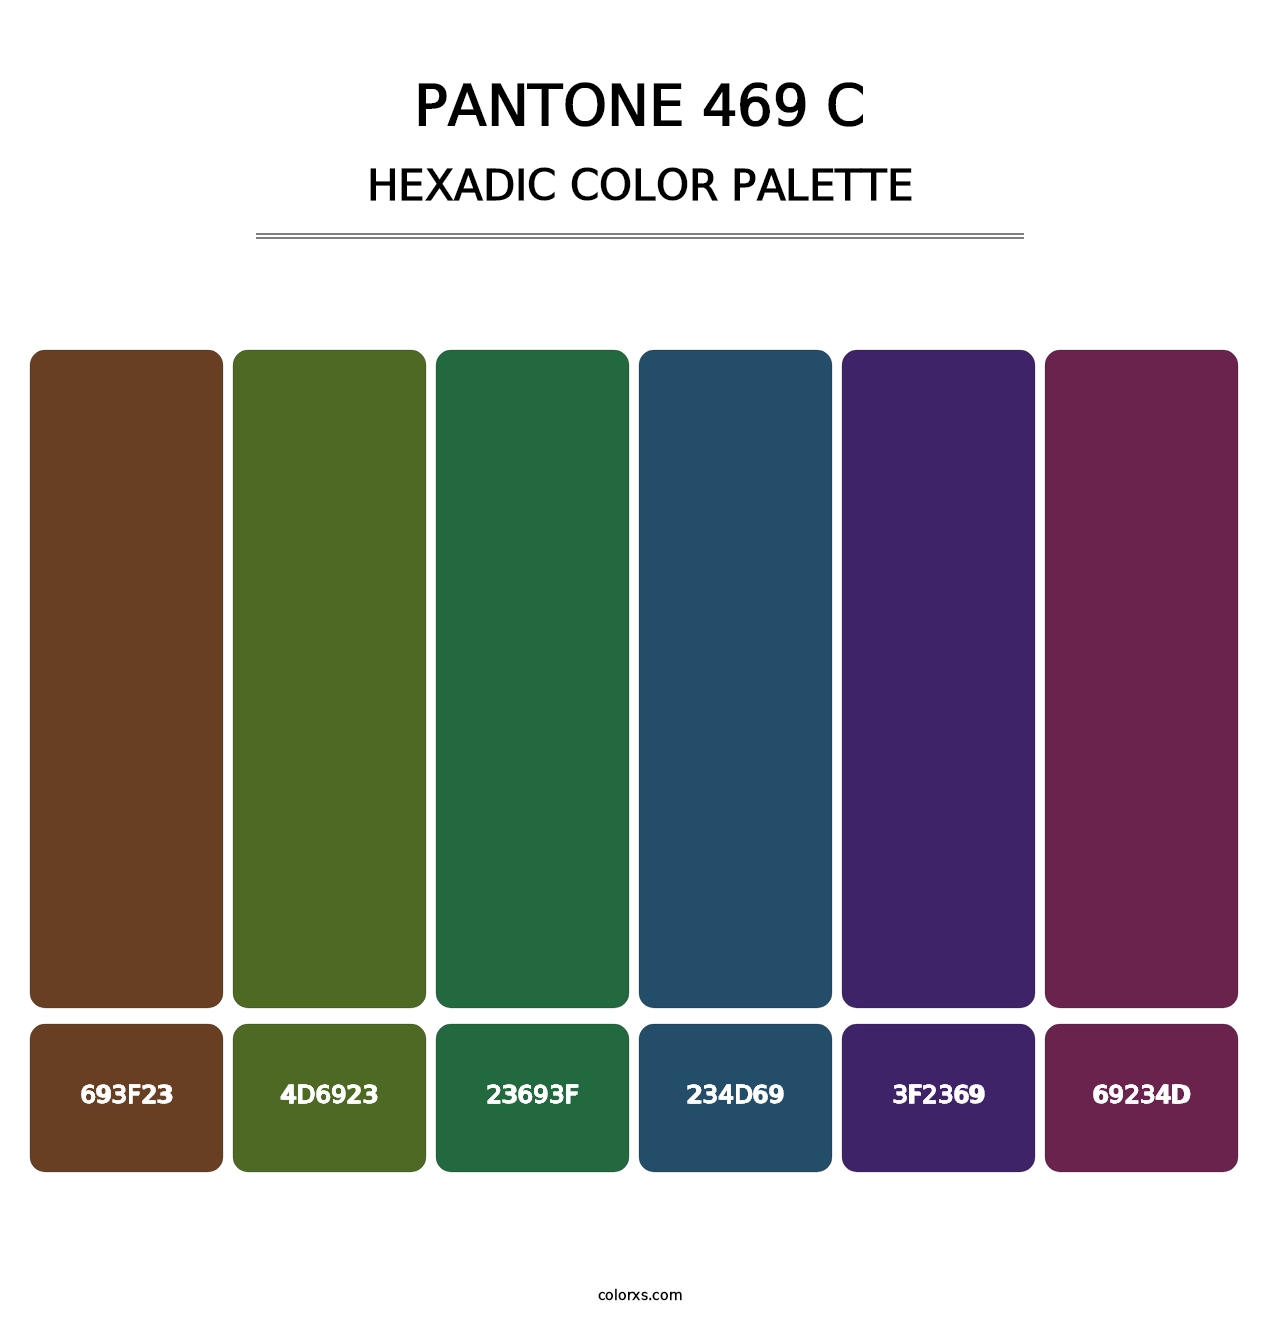 PANTONE 469 C - Hexadic Color Palette